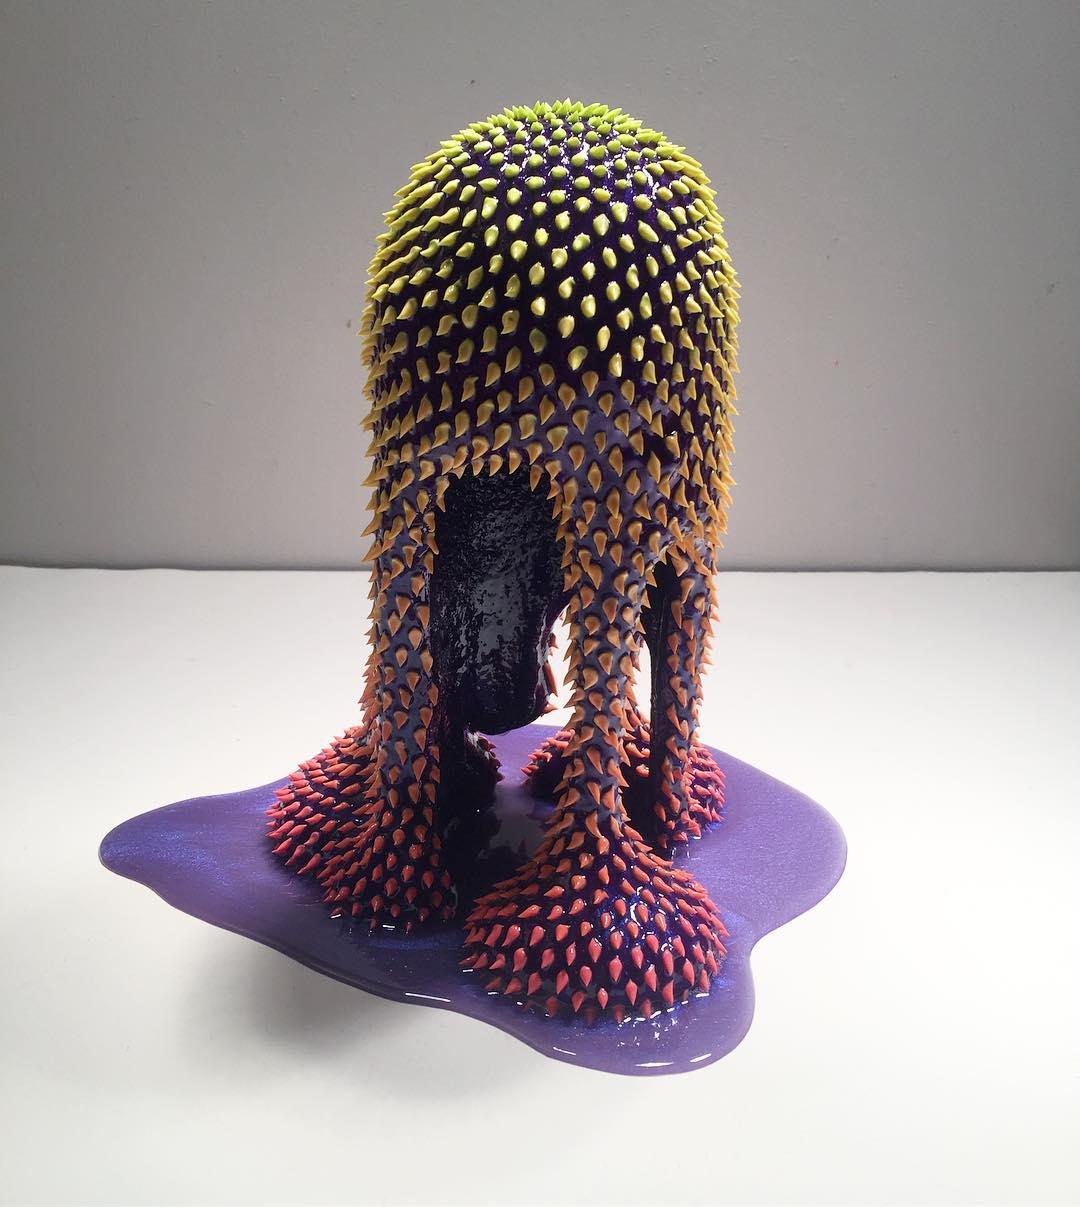 Incredible Drip Blob And Squish Multi Colored Sculptures By Dan Lam 29